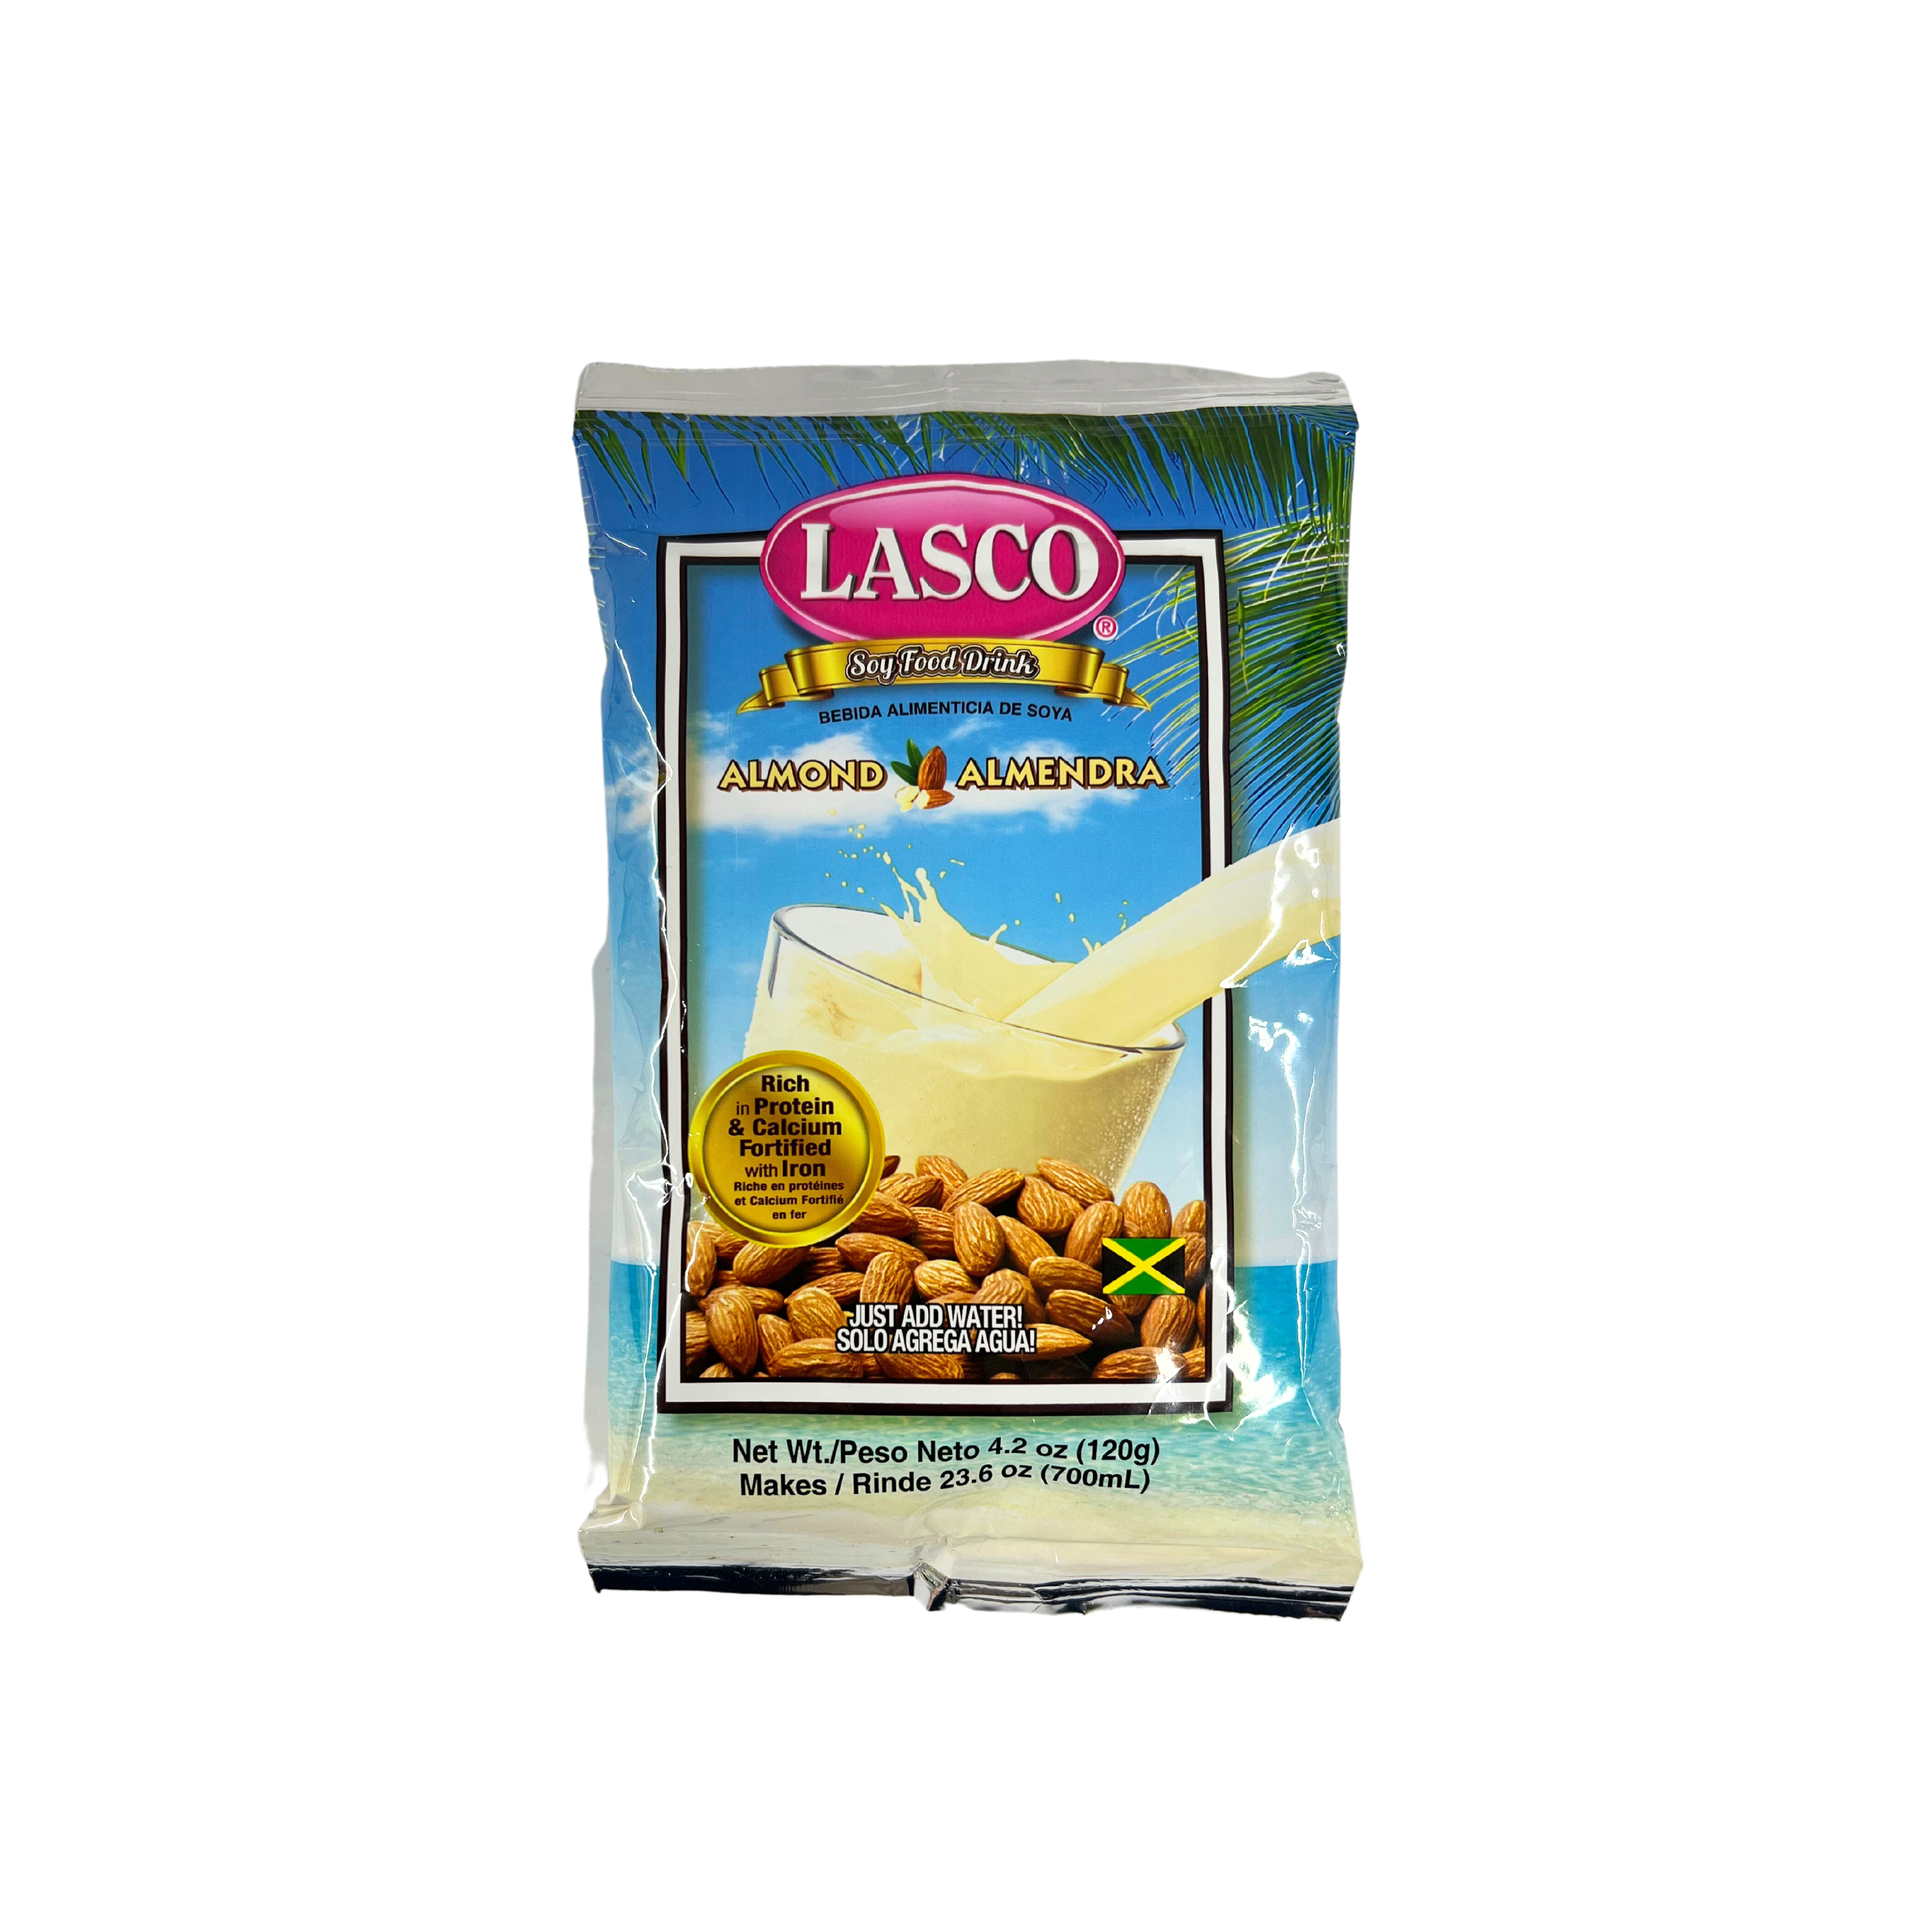 Lasco Almond Soy Drink 120g